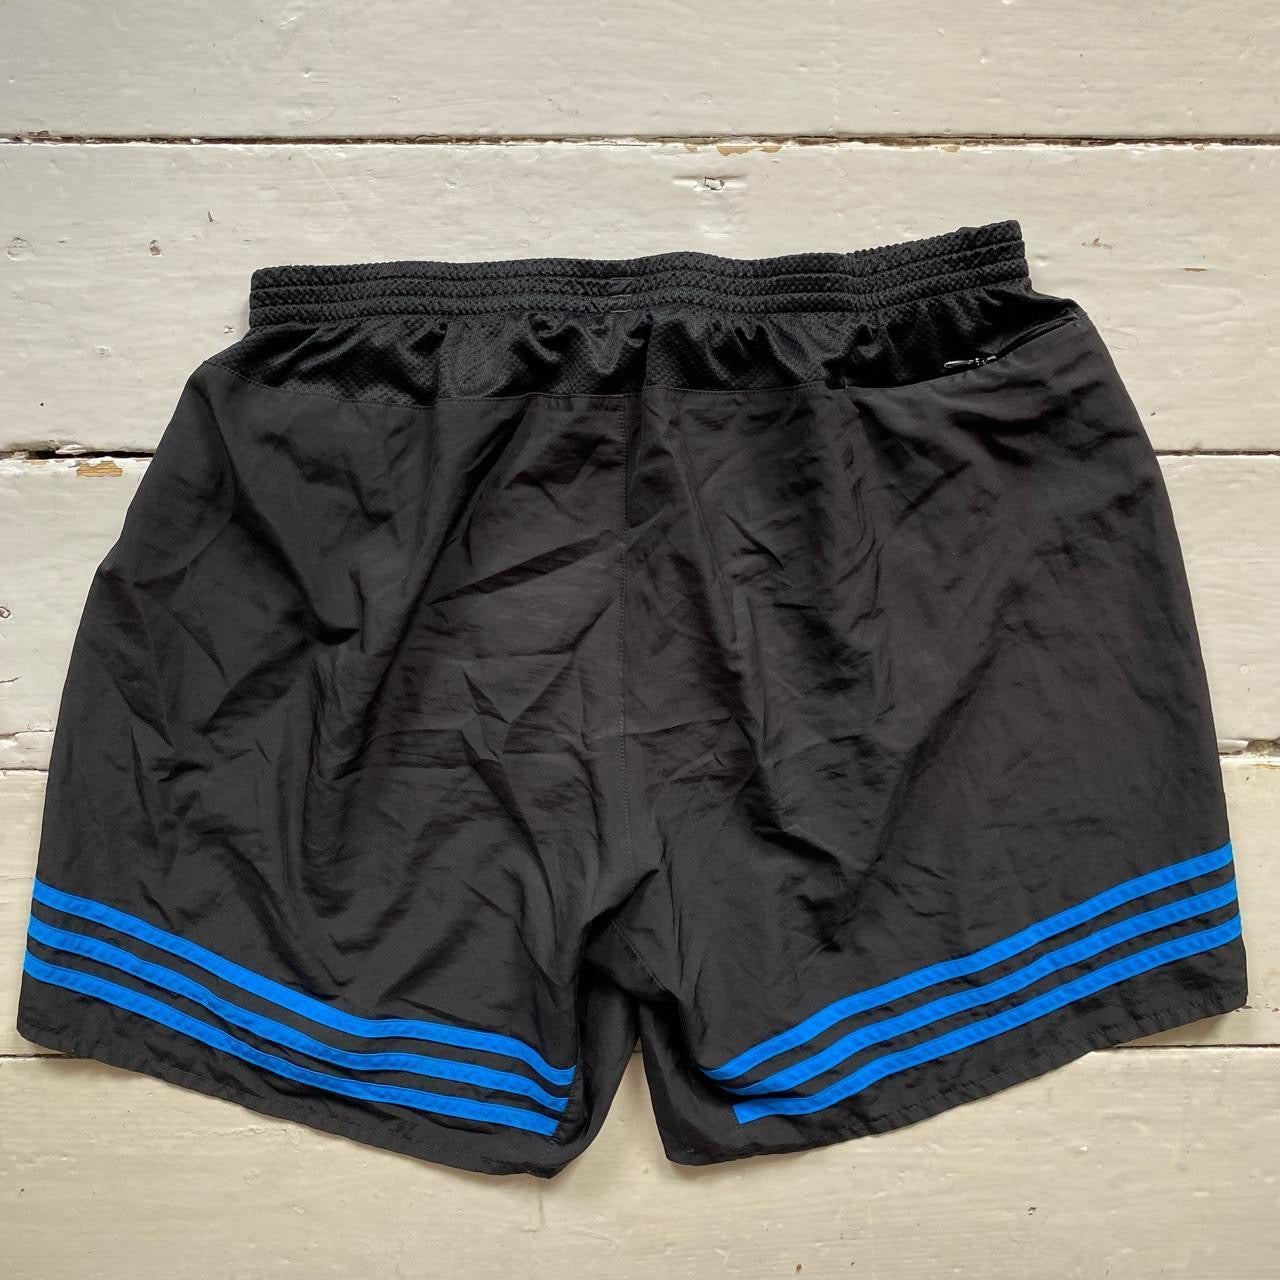 Adidas Black and Blue Shell Shorts (XL)